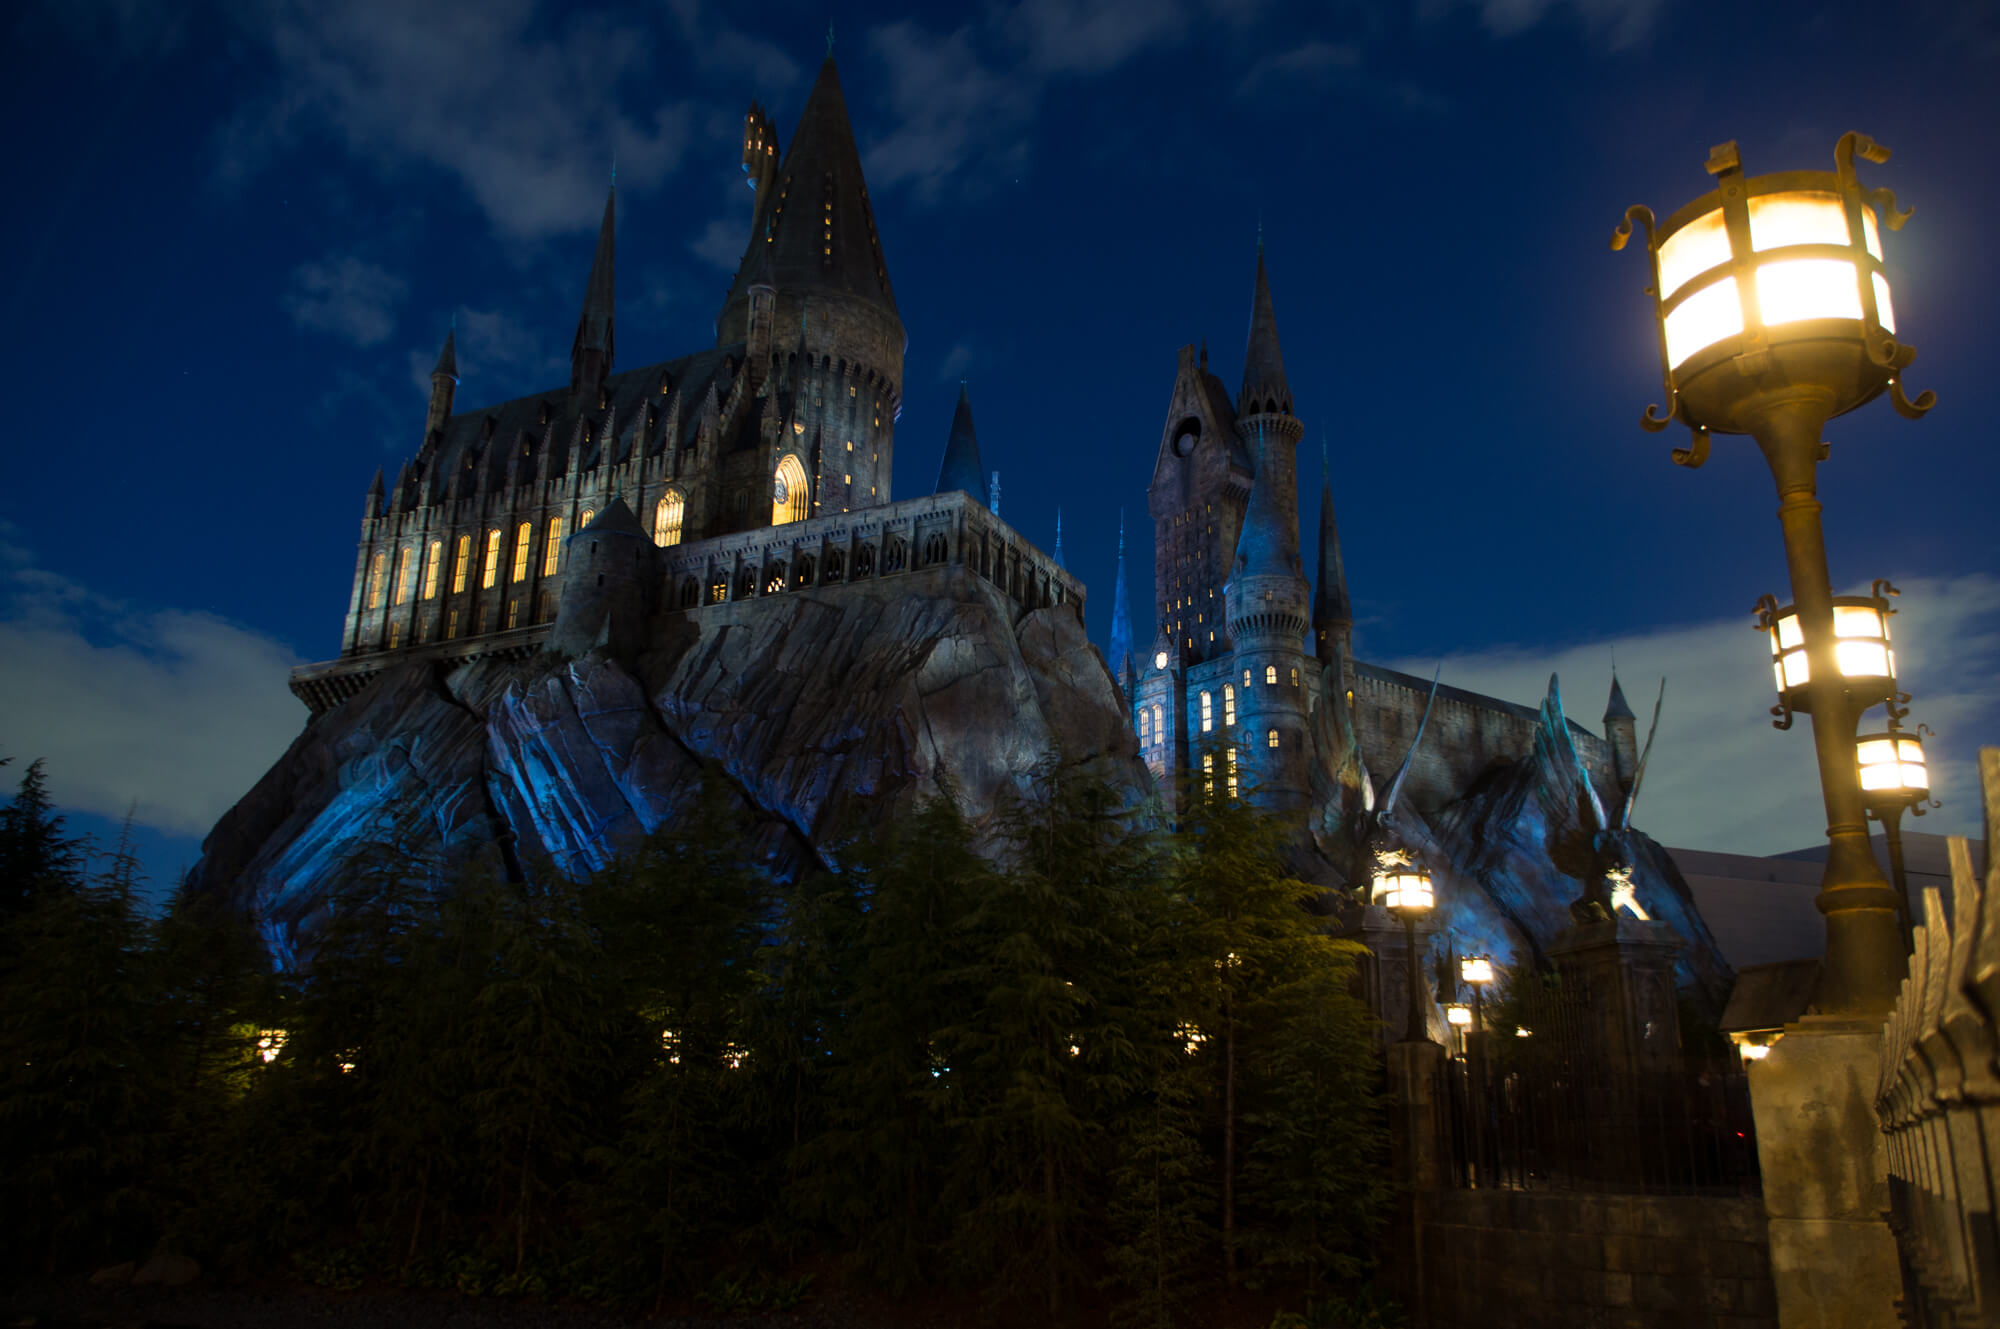 USJ: The Wizarding World of Harry Potter